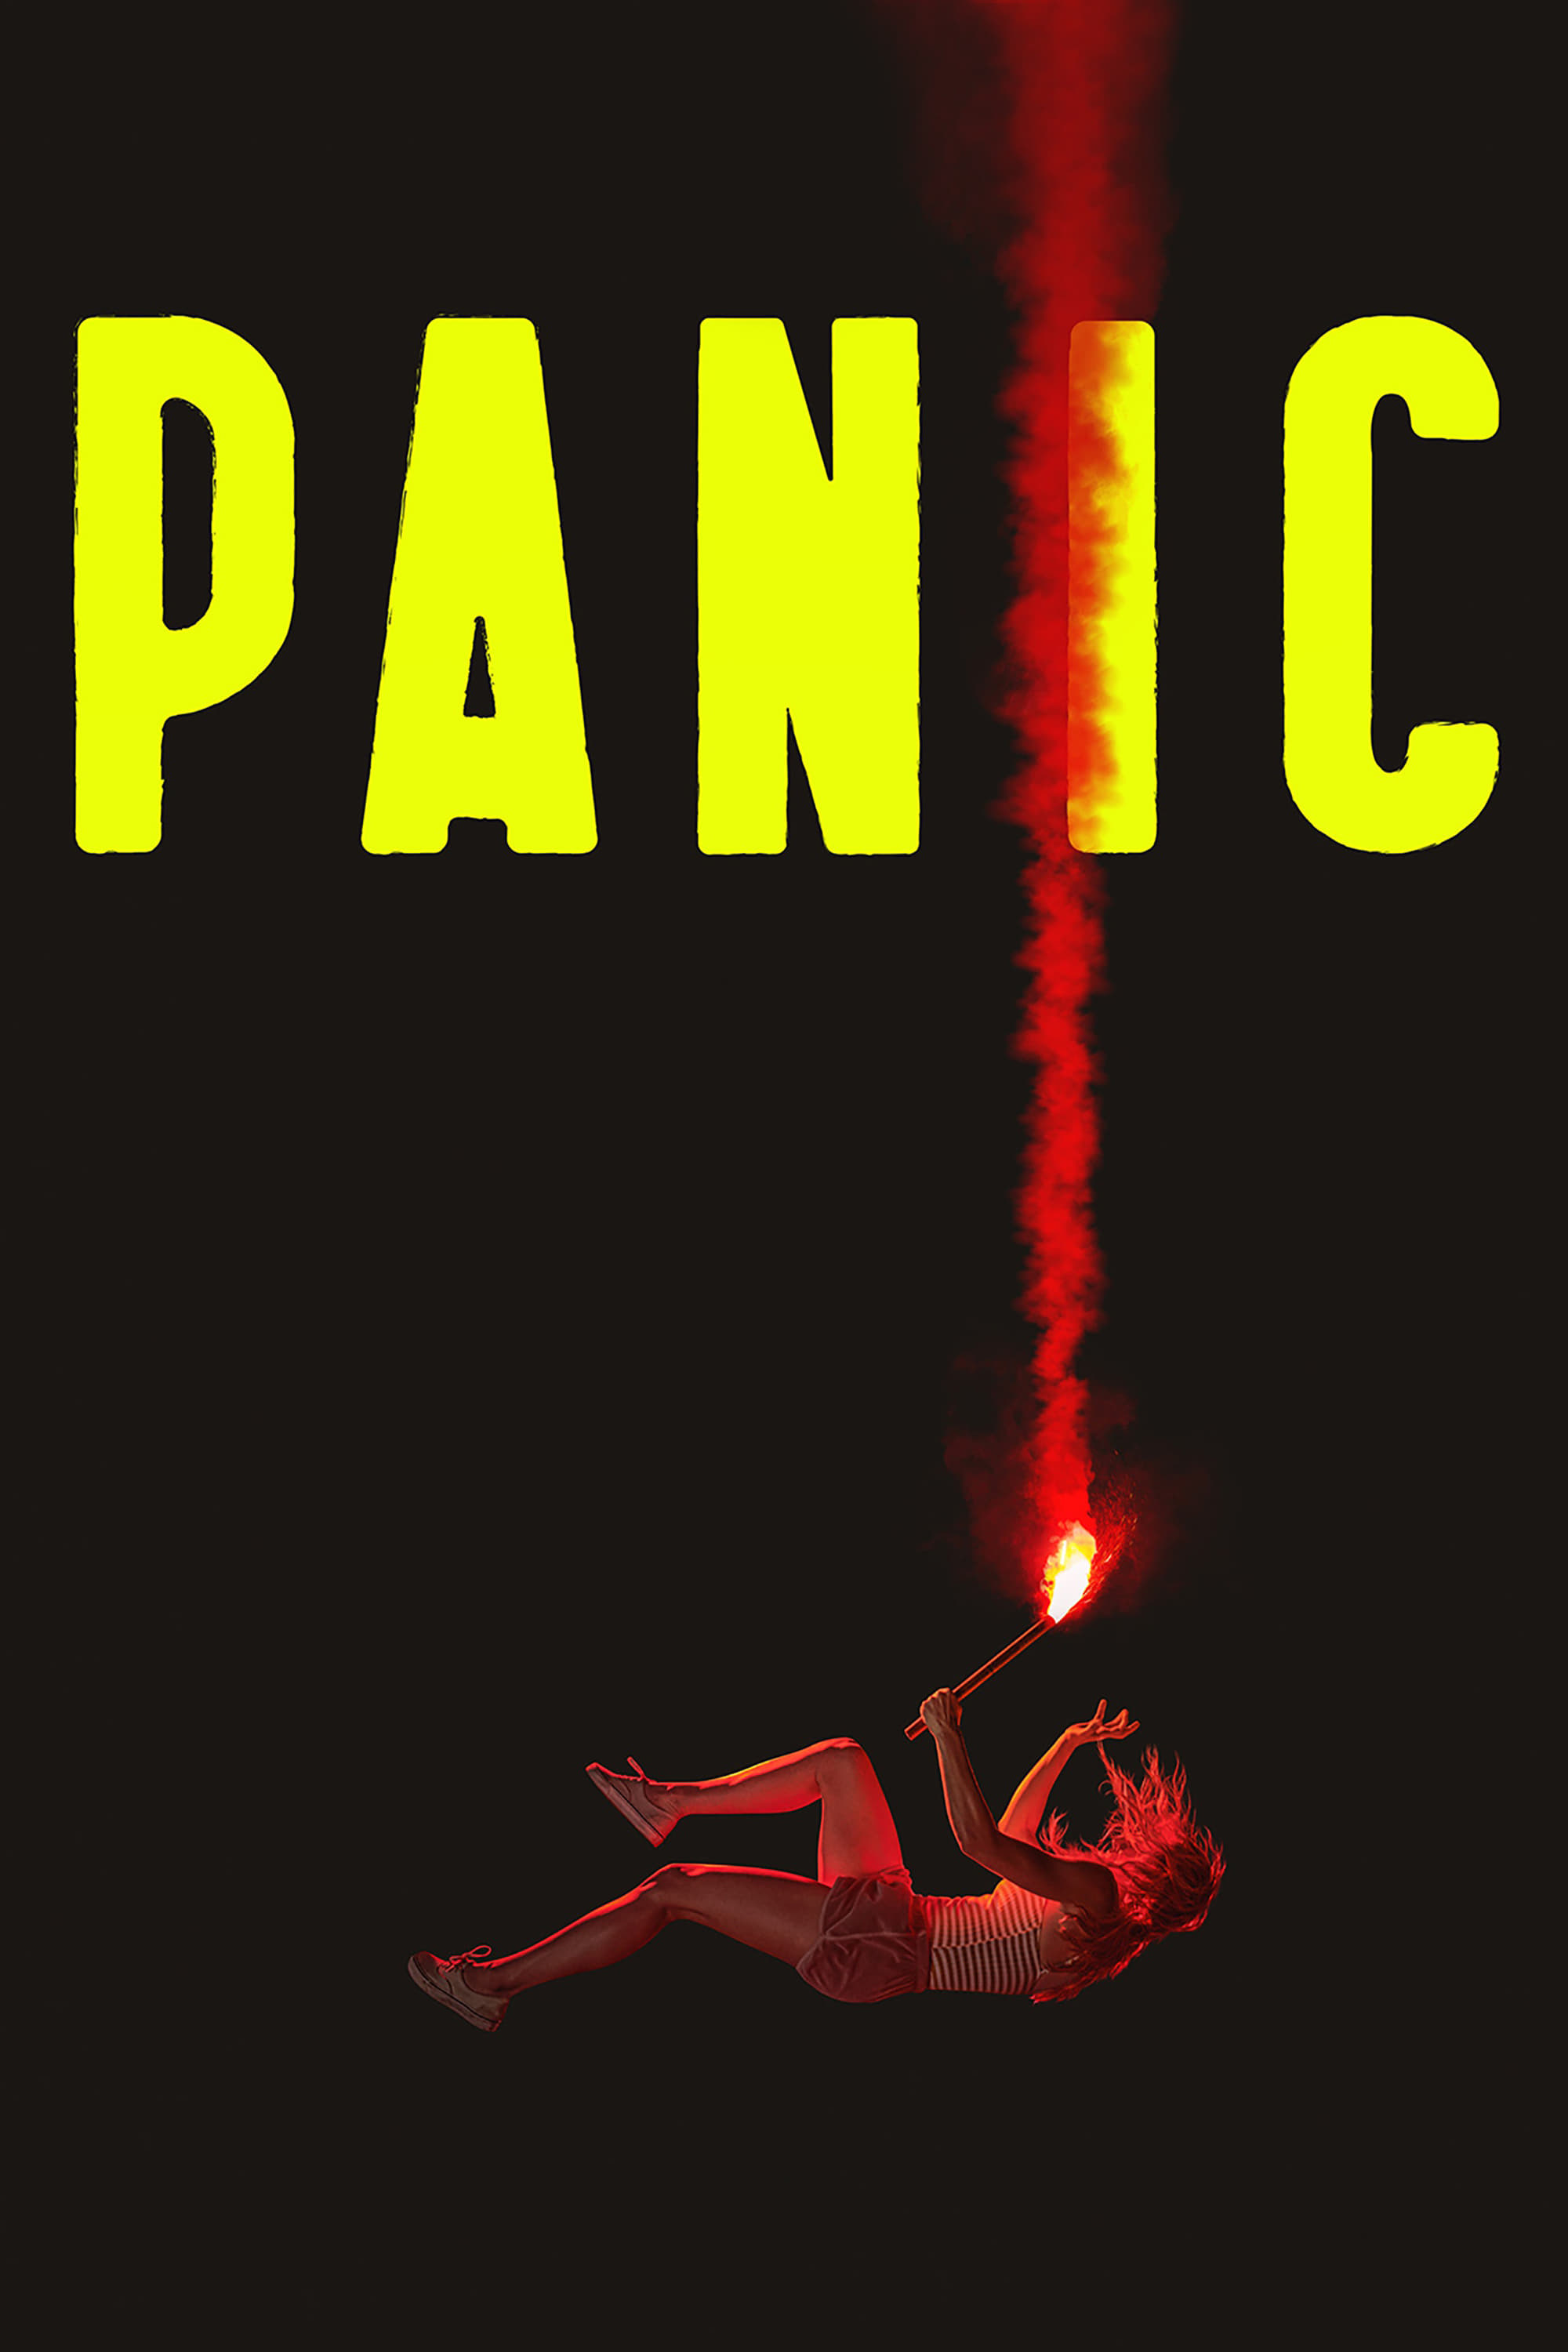 Panic (2021)